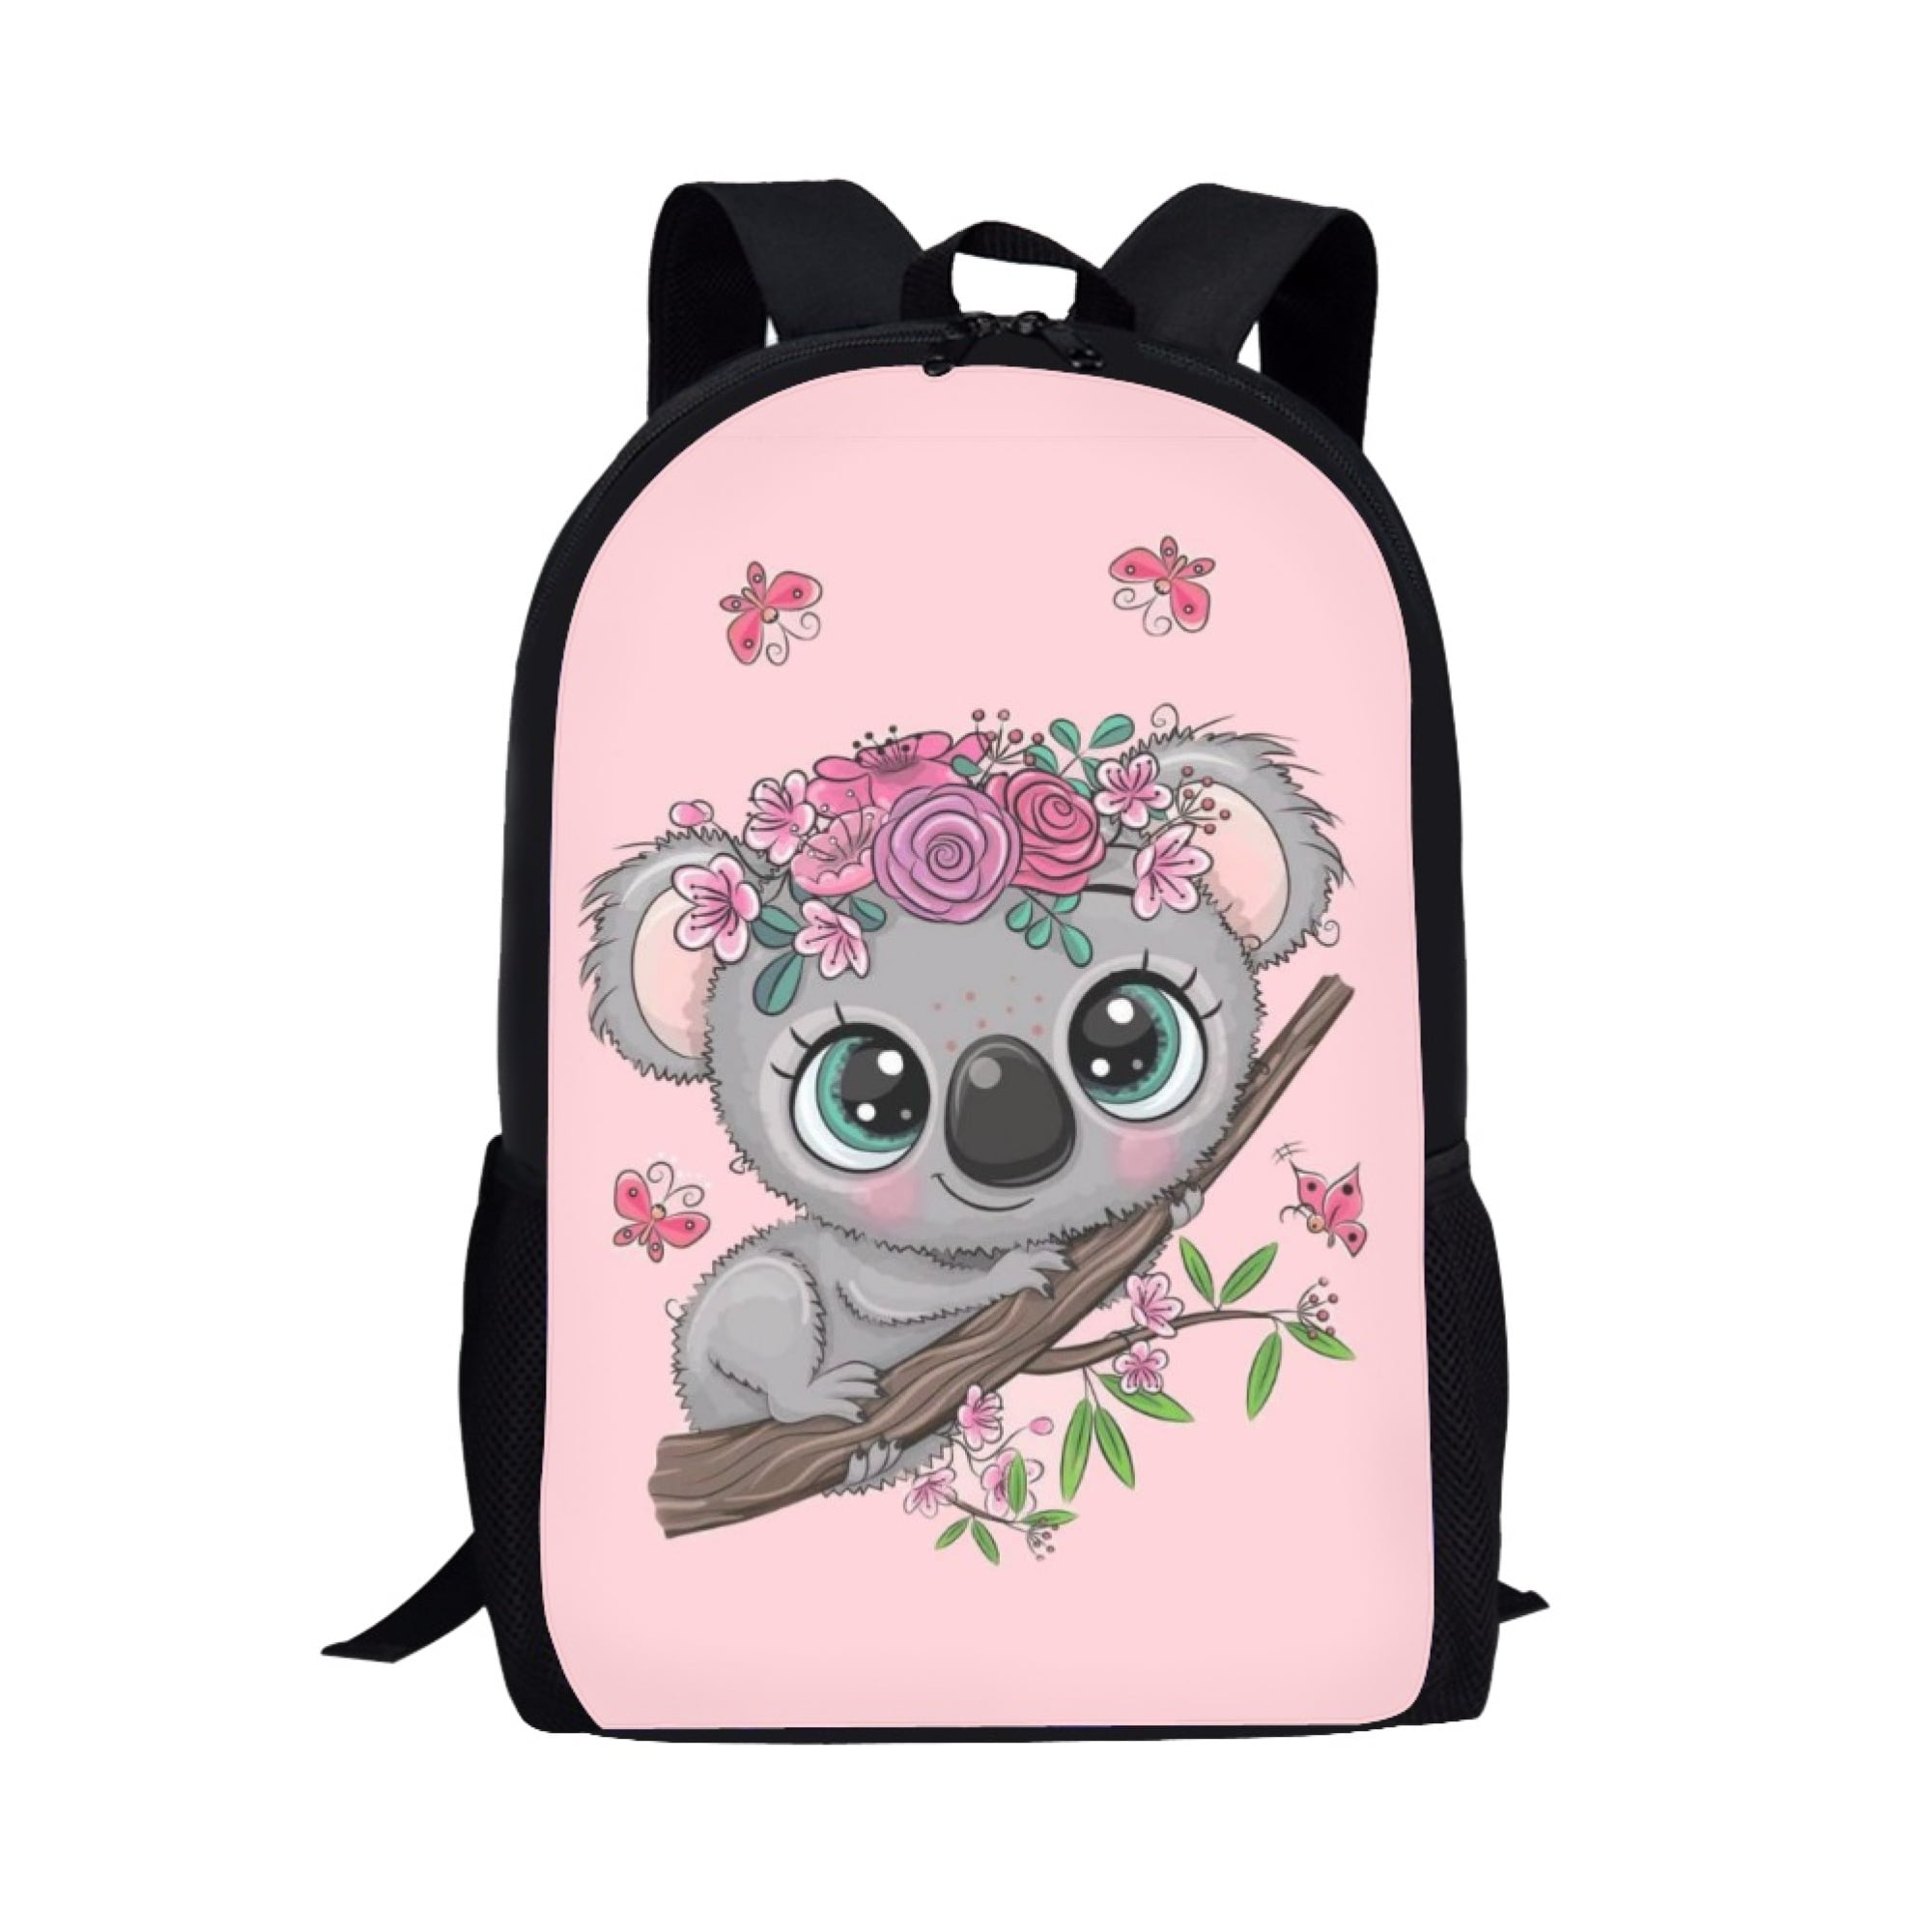 NETILGEN Flowers Koala Backpack Middle School Backpacks for Girls Teens  Kids Children Portable College Students Shoulder Bags for Short Trip